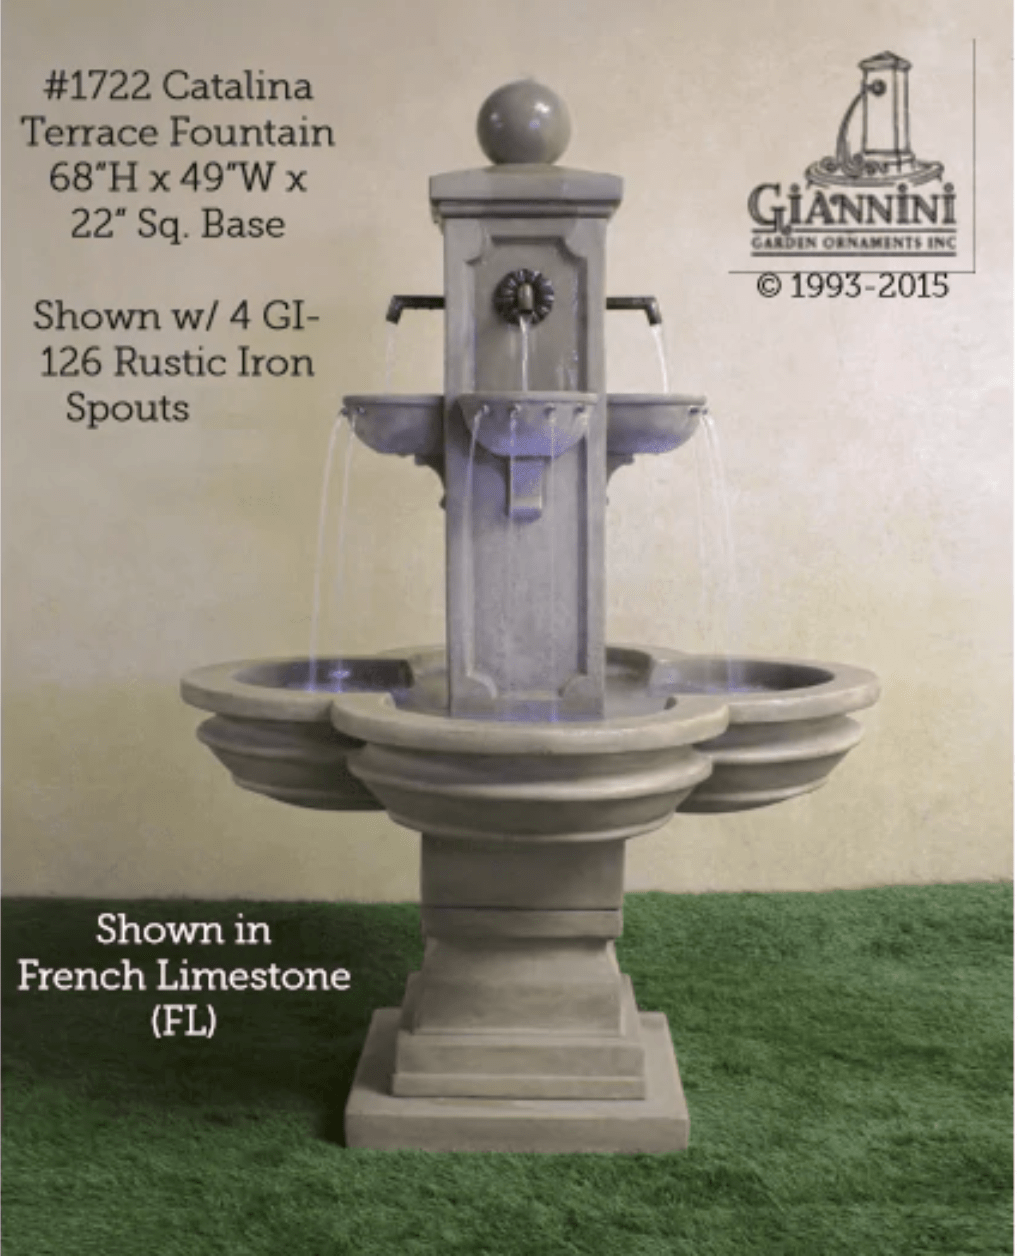 FountainsUSA 1722 / French Limestone (Color Shown) / GI-126 Rustic Iron Water Spout Giannini Garden Catalina Concrete Terrace Outdoor Garden Fountain 1722